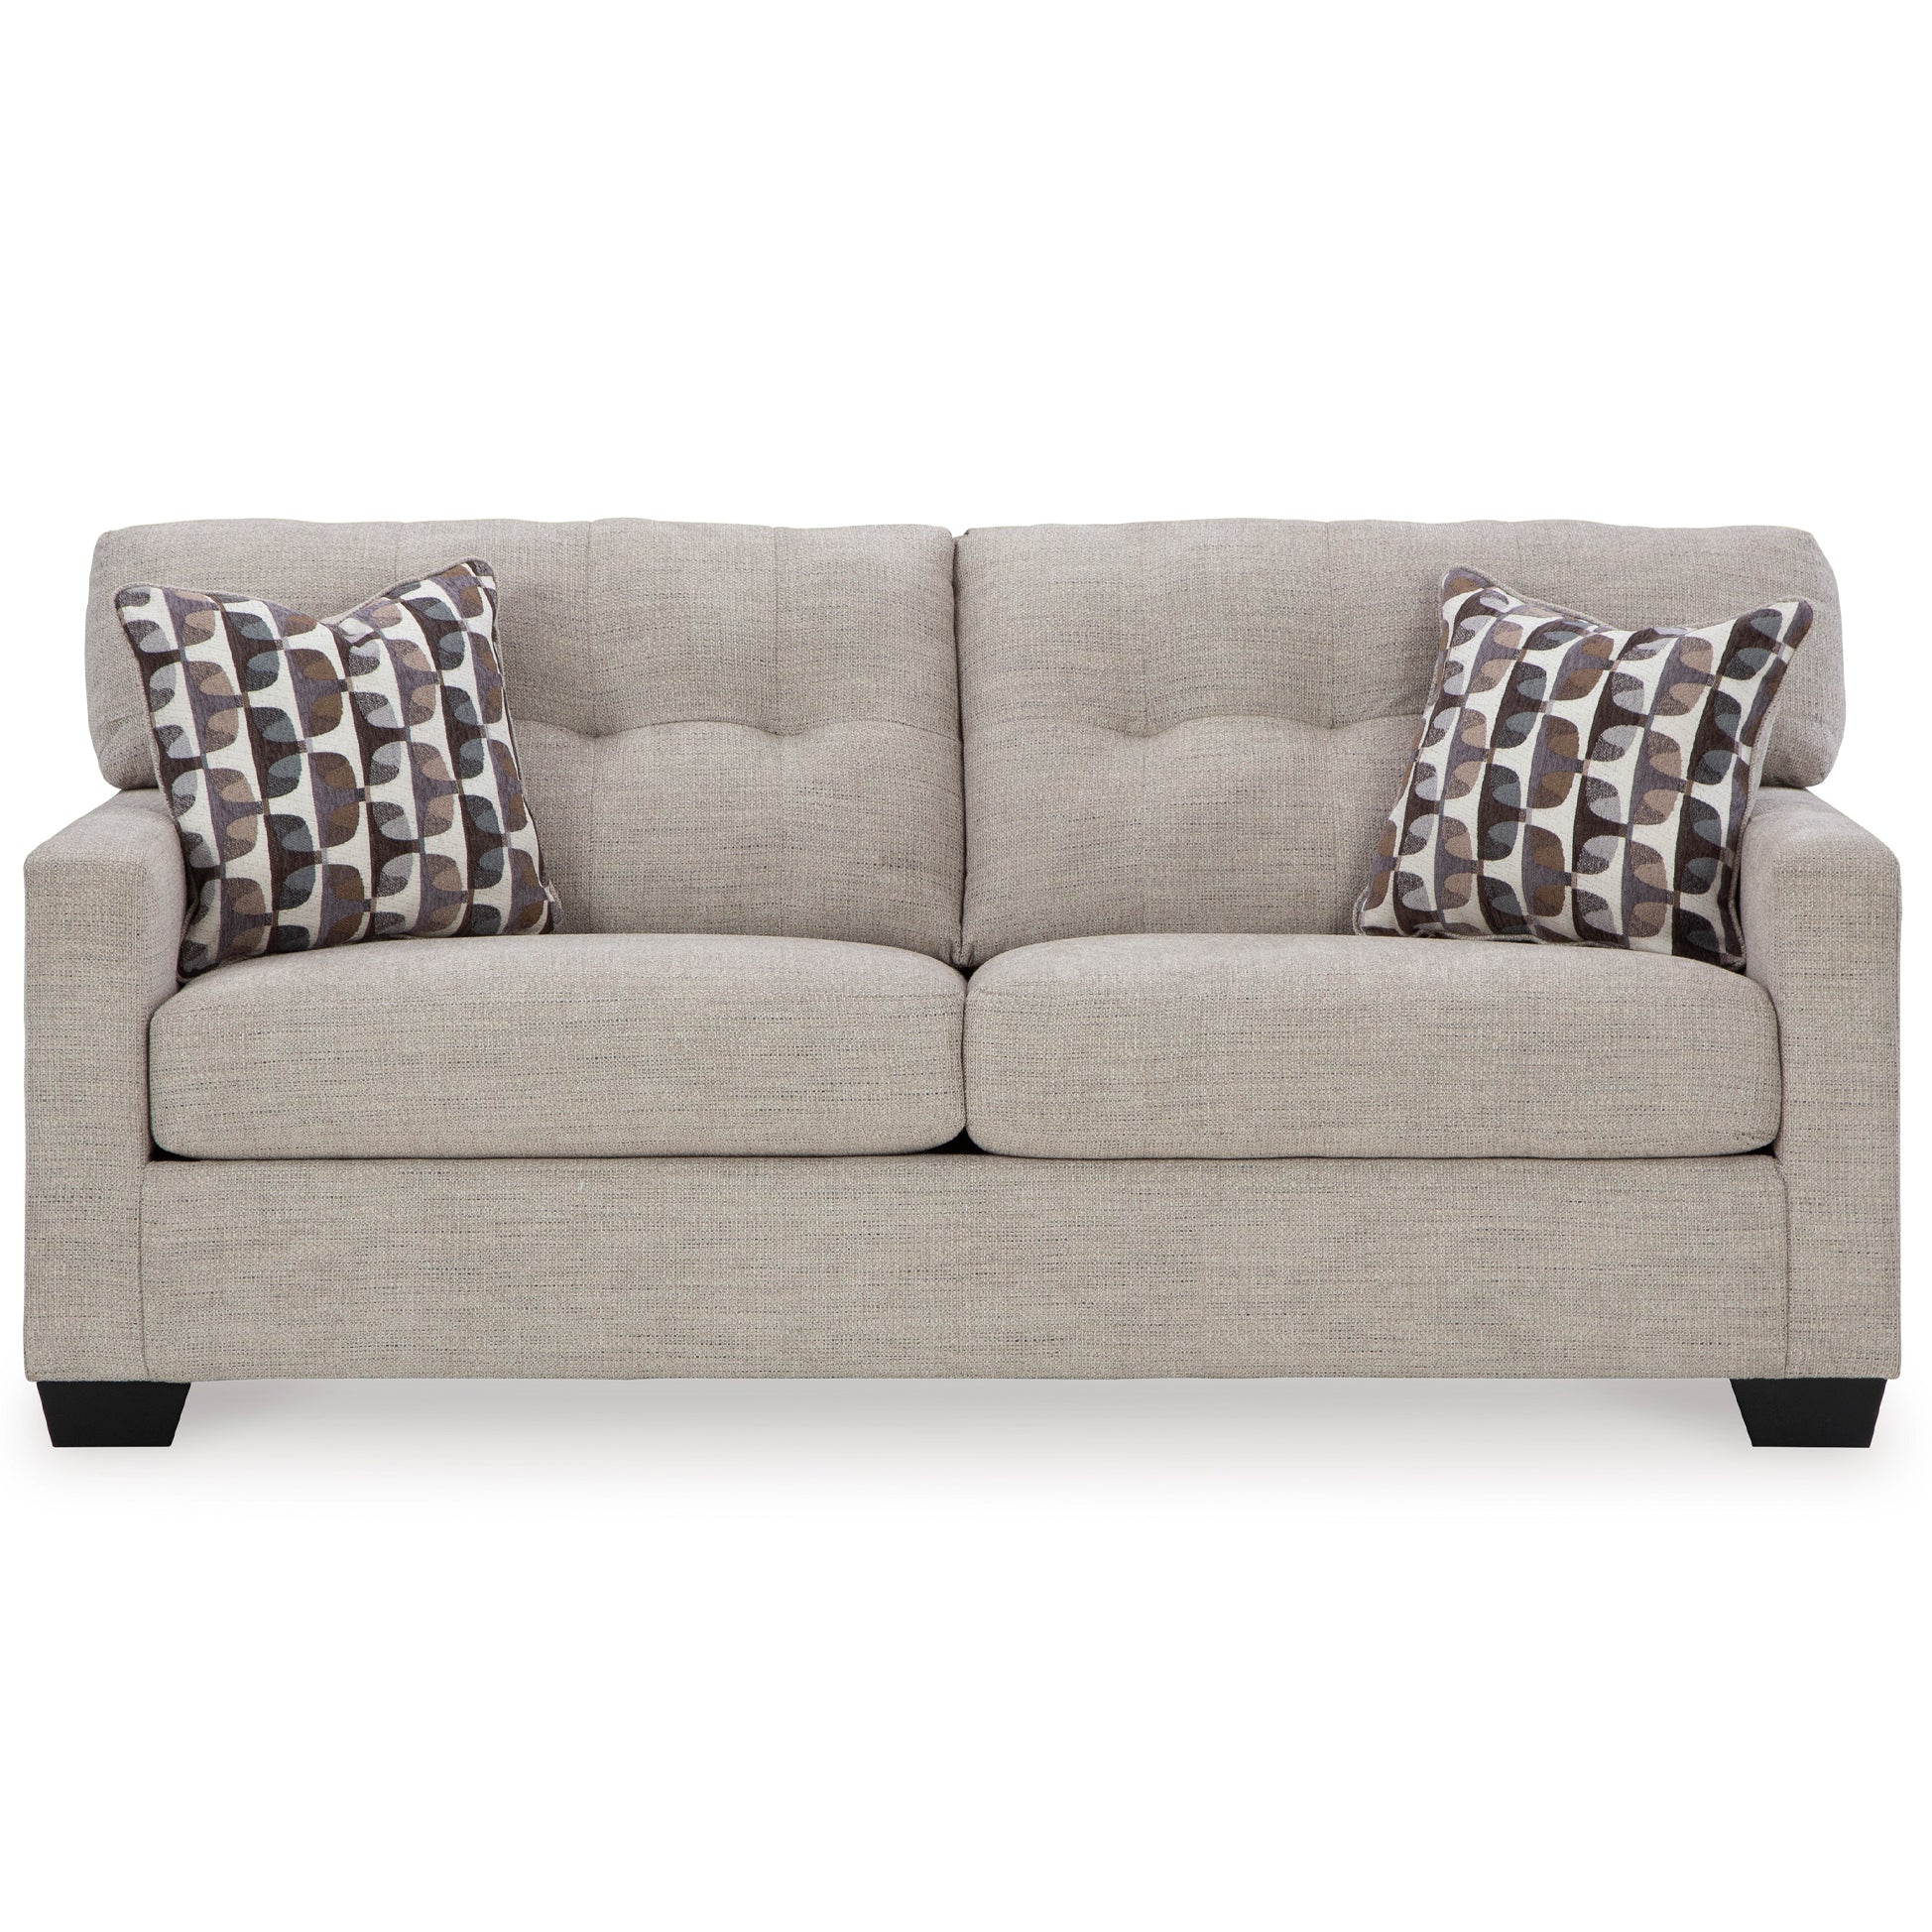 Elegant Mahoney Sofa with plush cushions and contemporary design, ideal for Milwaukee home interiors